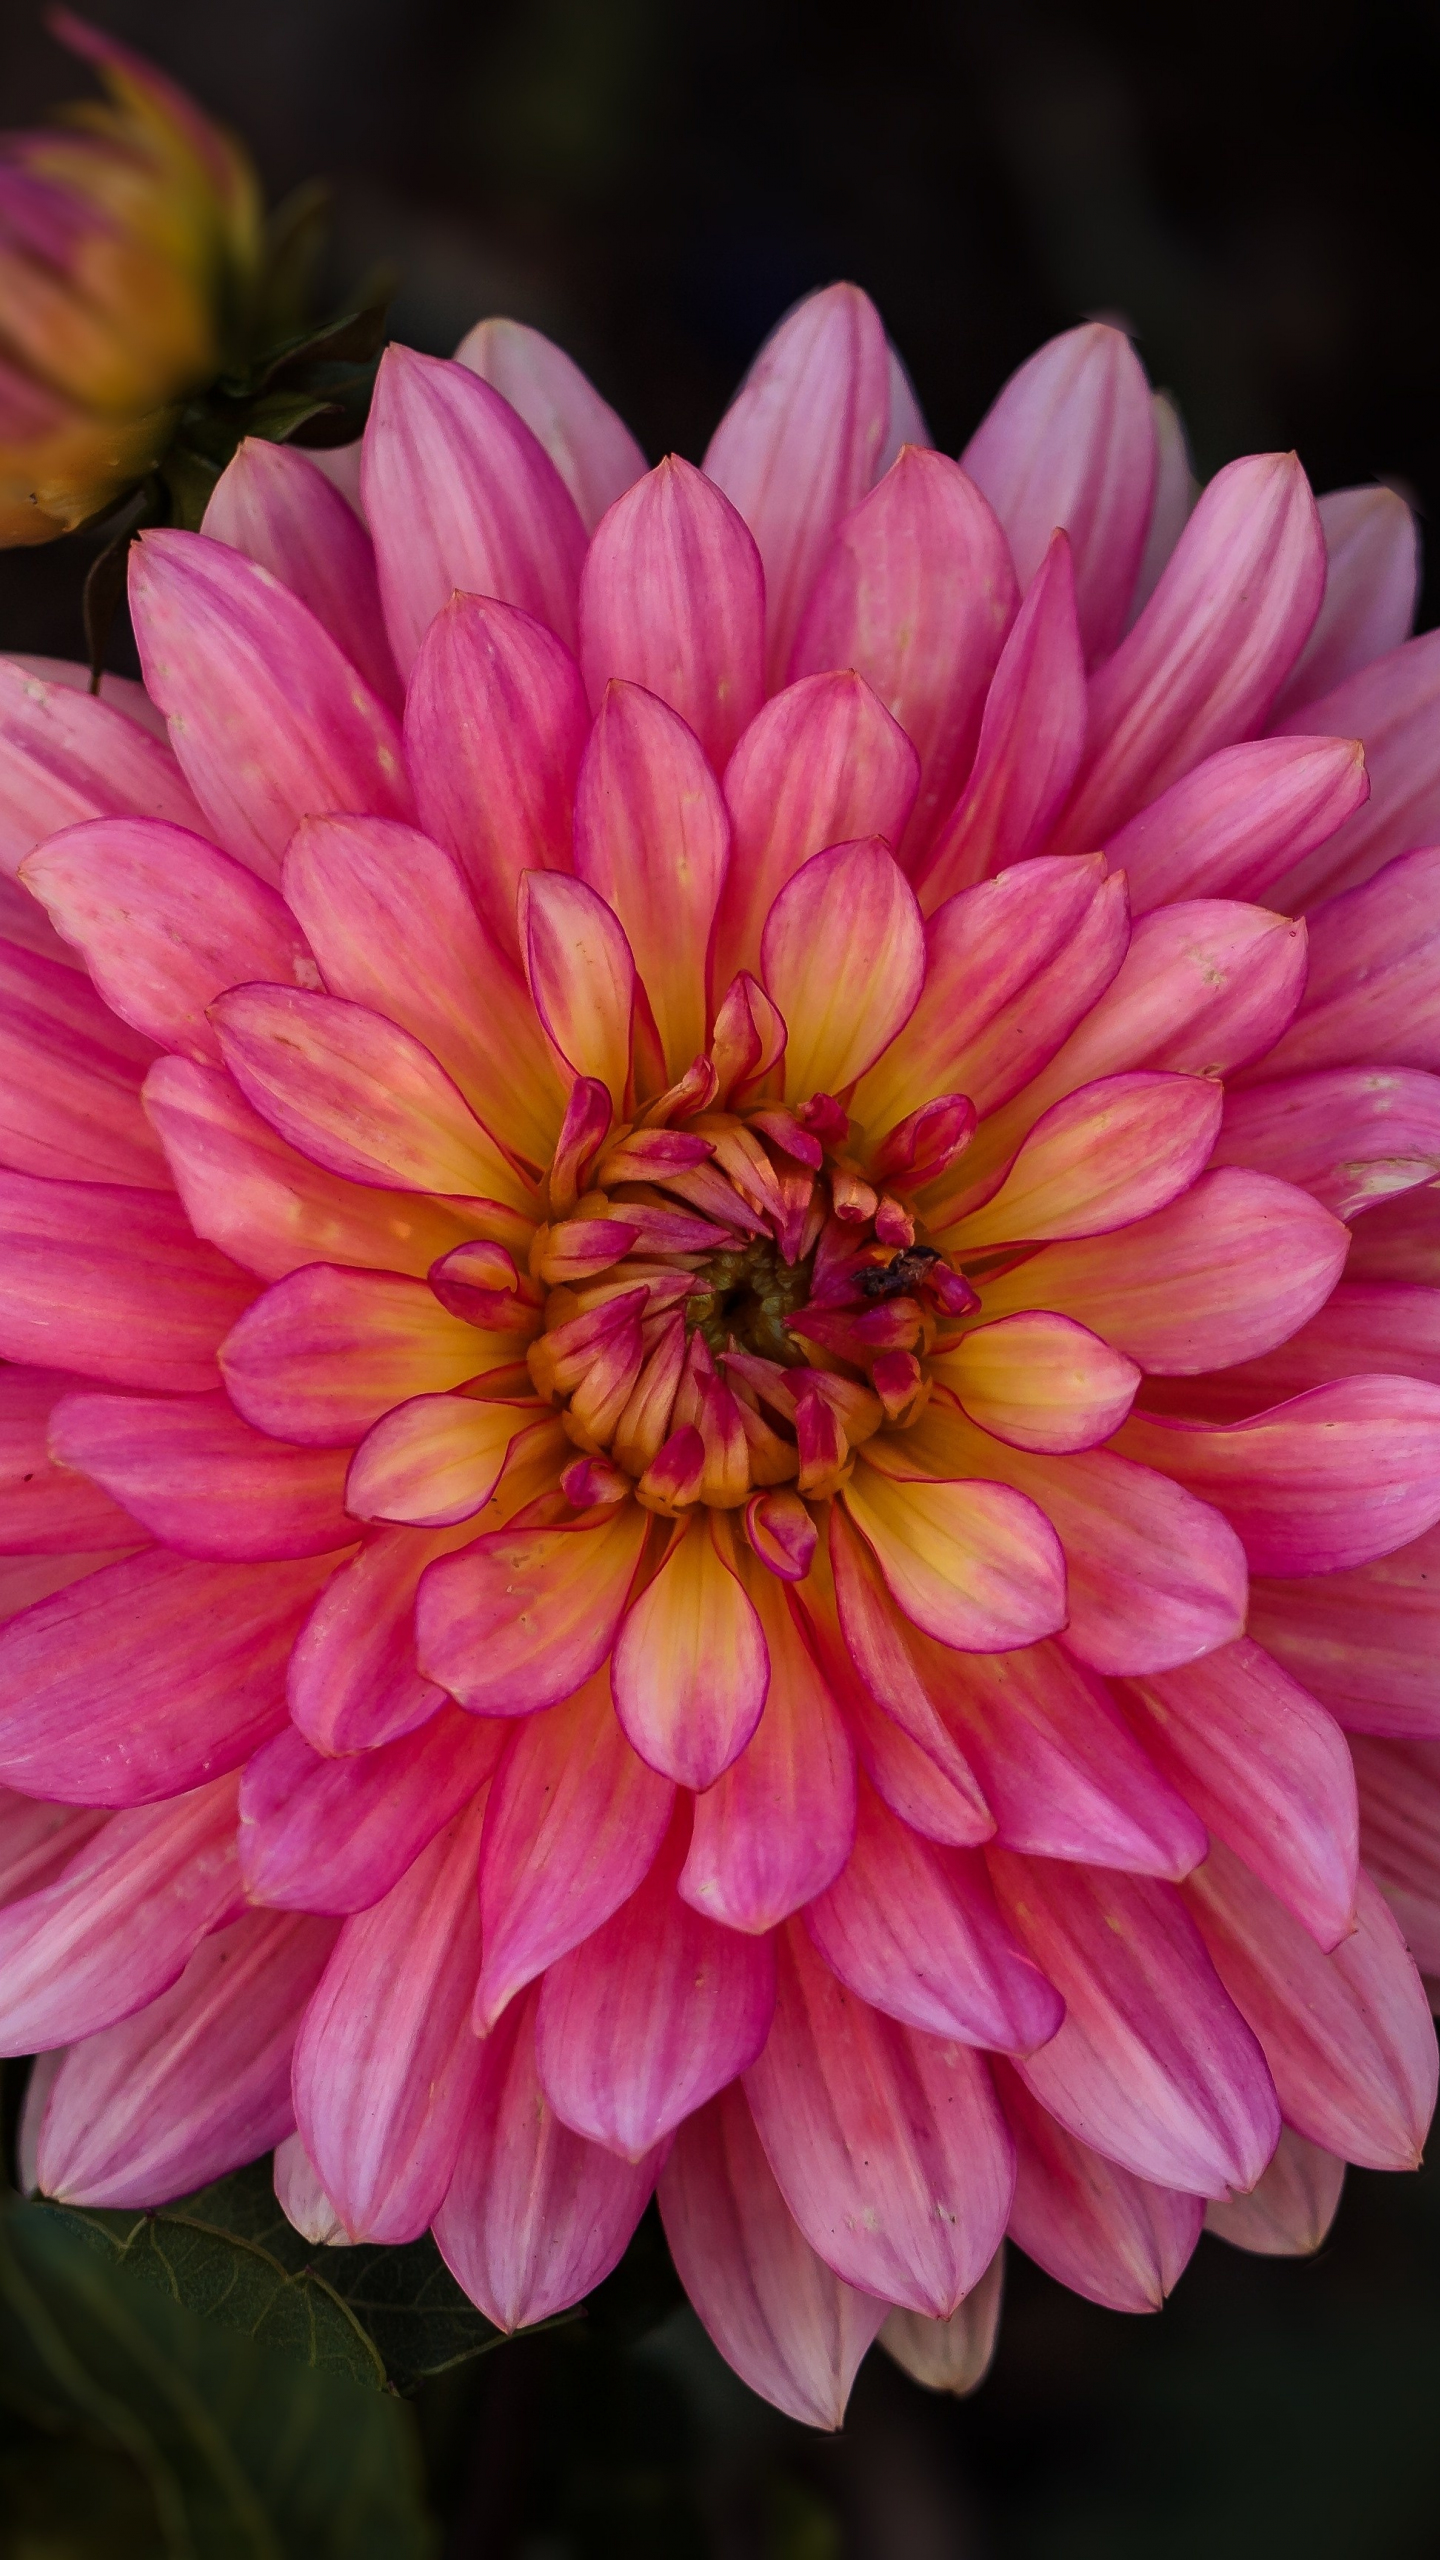 Download 1440x2560 wallpaper pink dahlia, flower, qhd samsung galaxy s s edge, note, lg g 1440x2560 HD image, background, 4880